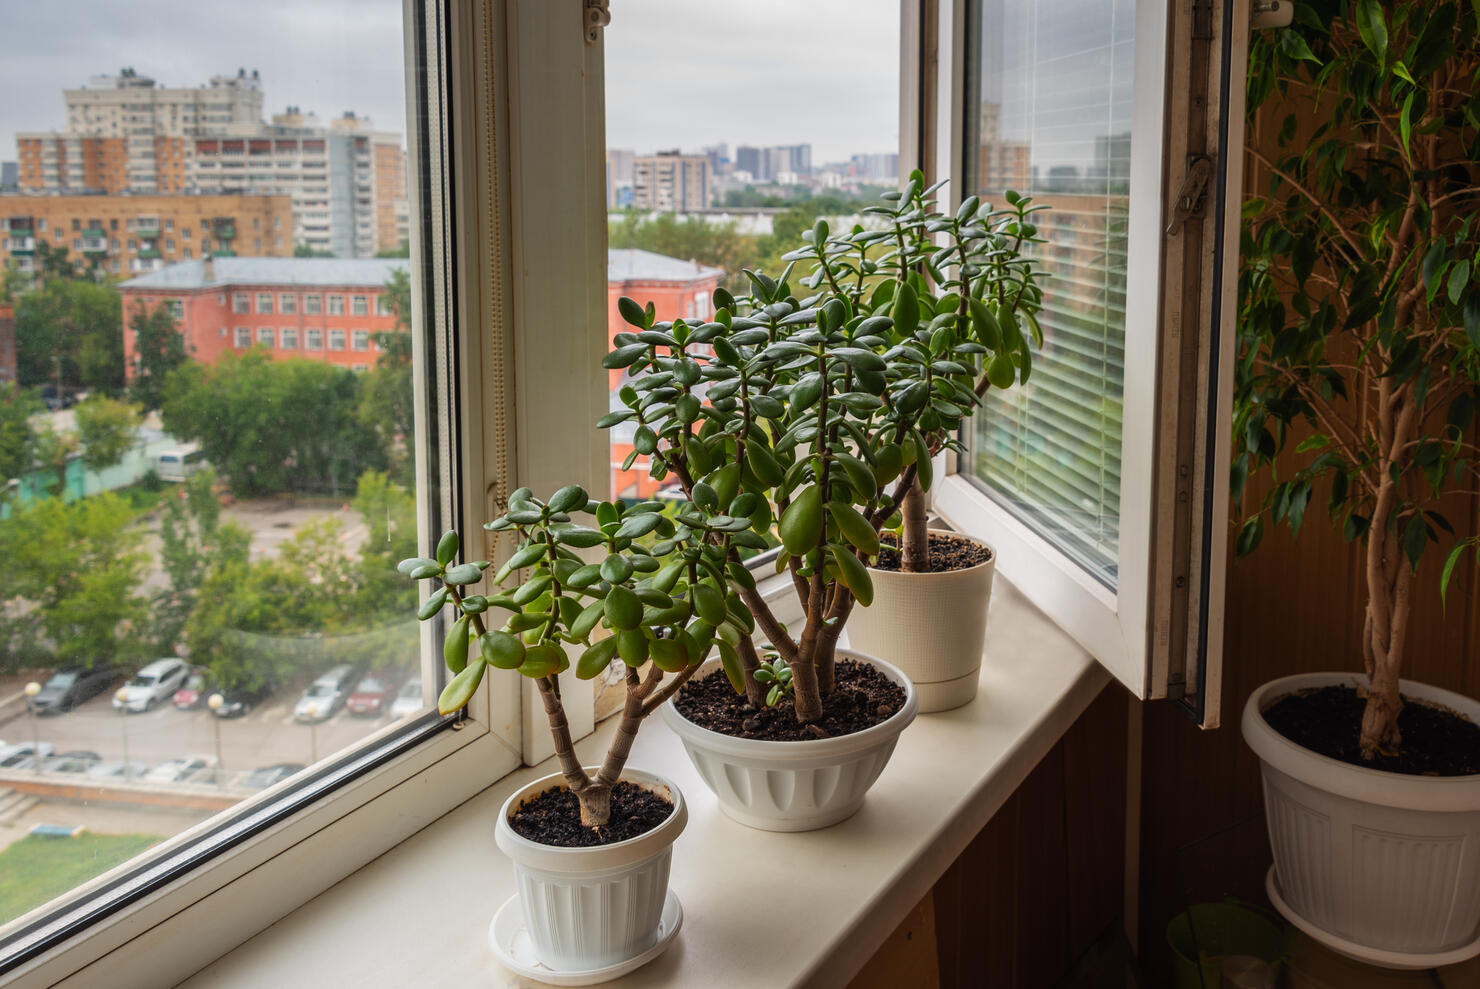 Houseplant Crassula on the windowsill on the background of the window